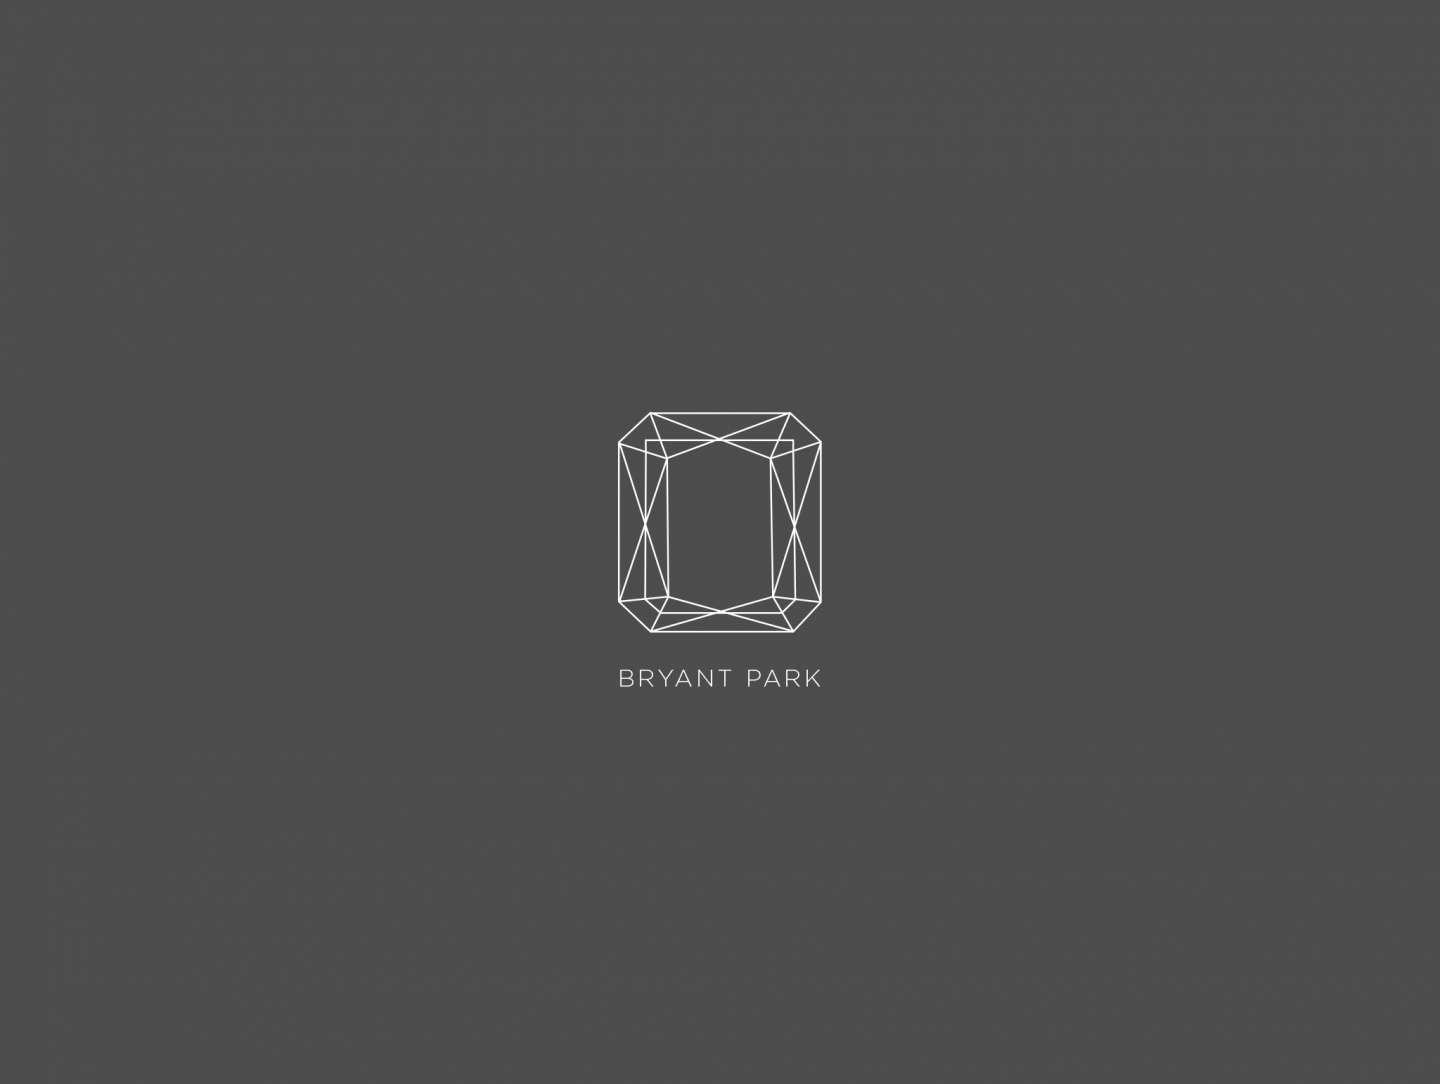 Bryant Park Rebranding